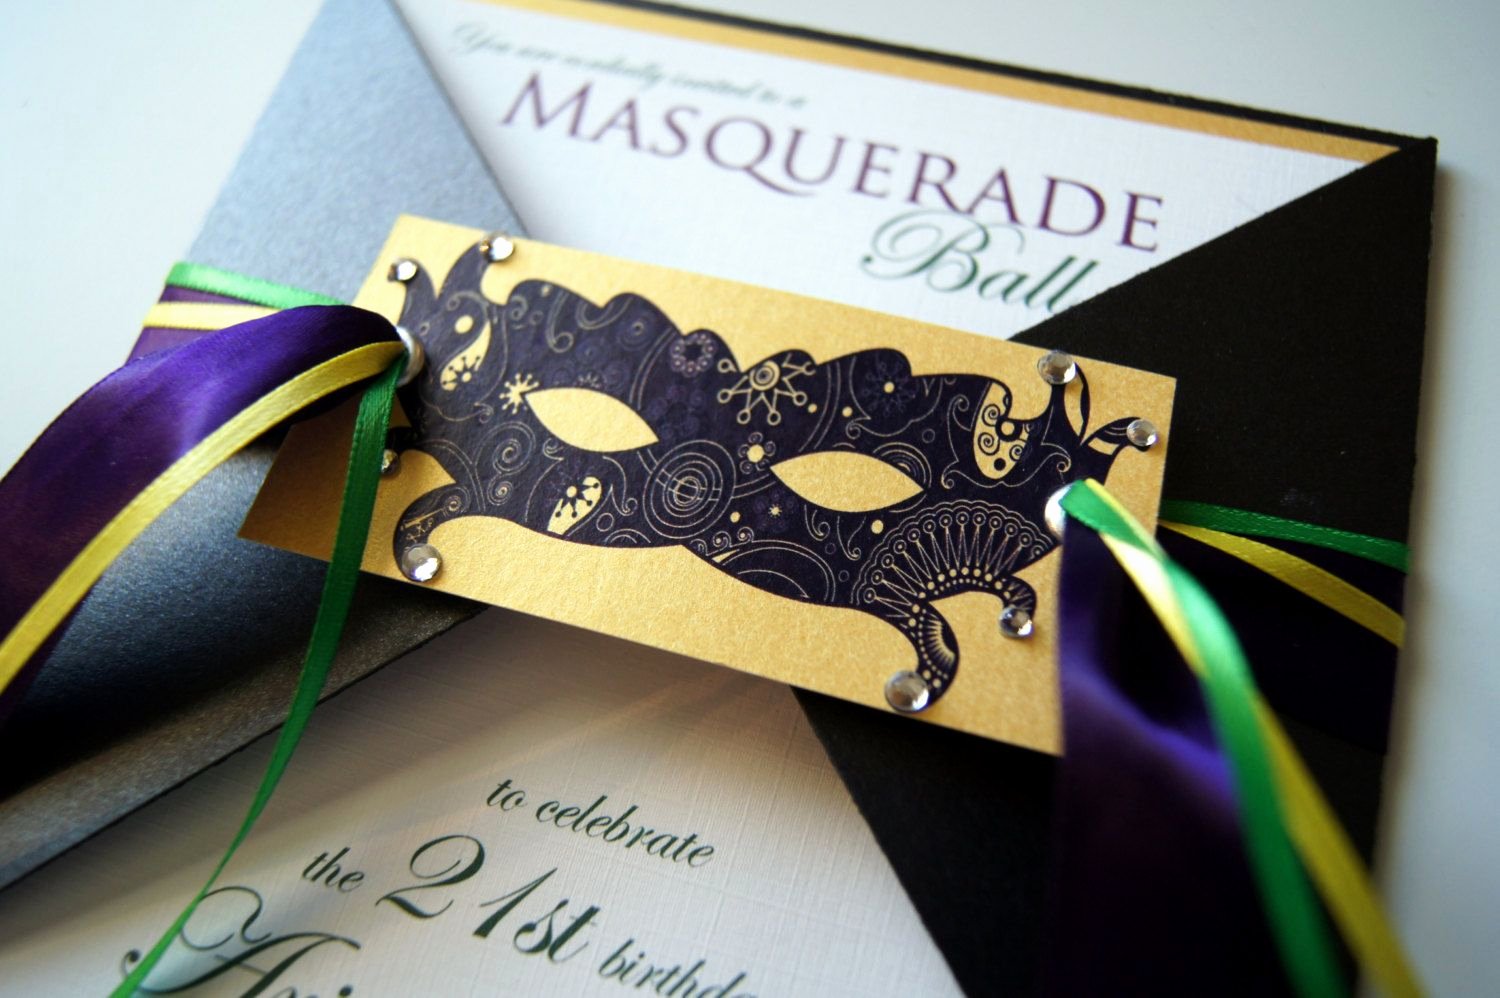 Masquerade Ball Invitations Free Templates Luxury Ariannes Masquerade Ball Custom Invitation Suite $6 00 Via Etsy Masquerade